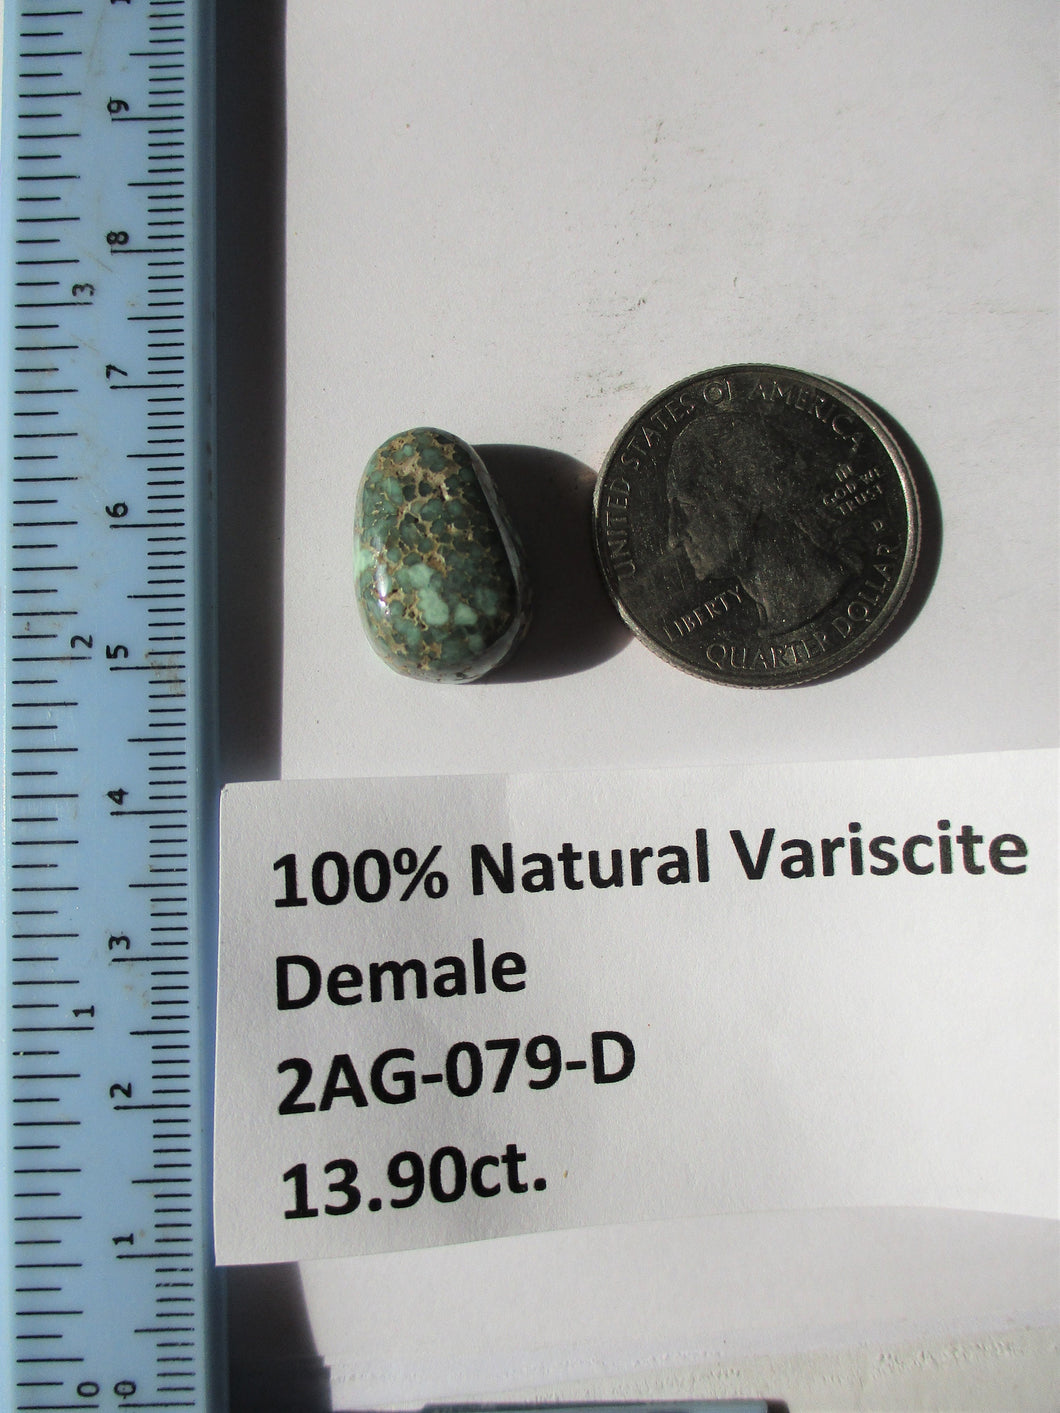 13.9 ct. (18x13x8 mm) 100% Natural Damele Variscite Cabochon Gemstone, # 2AG 079 s